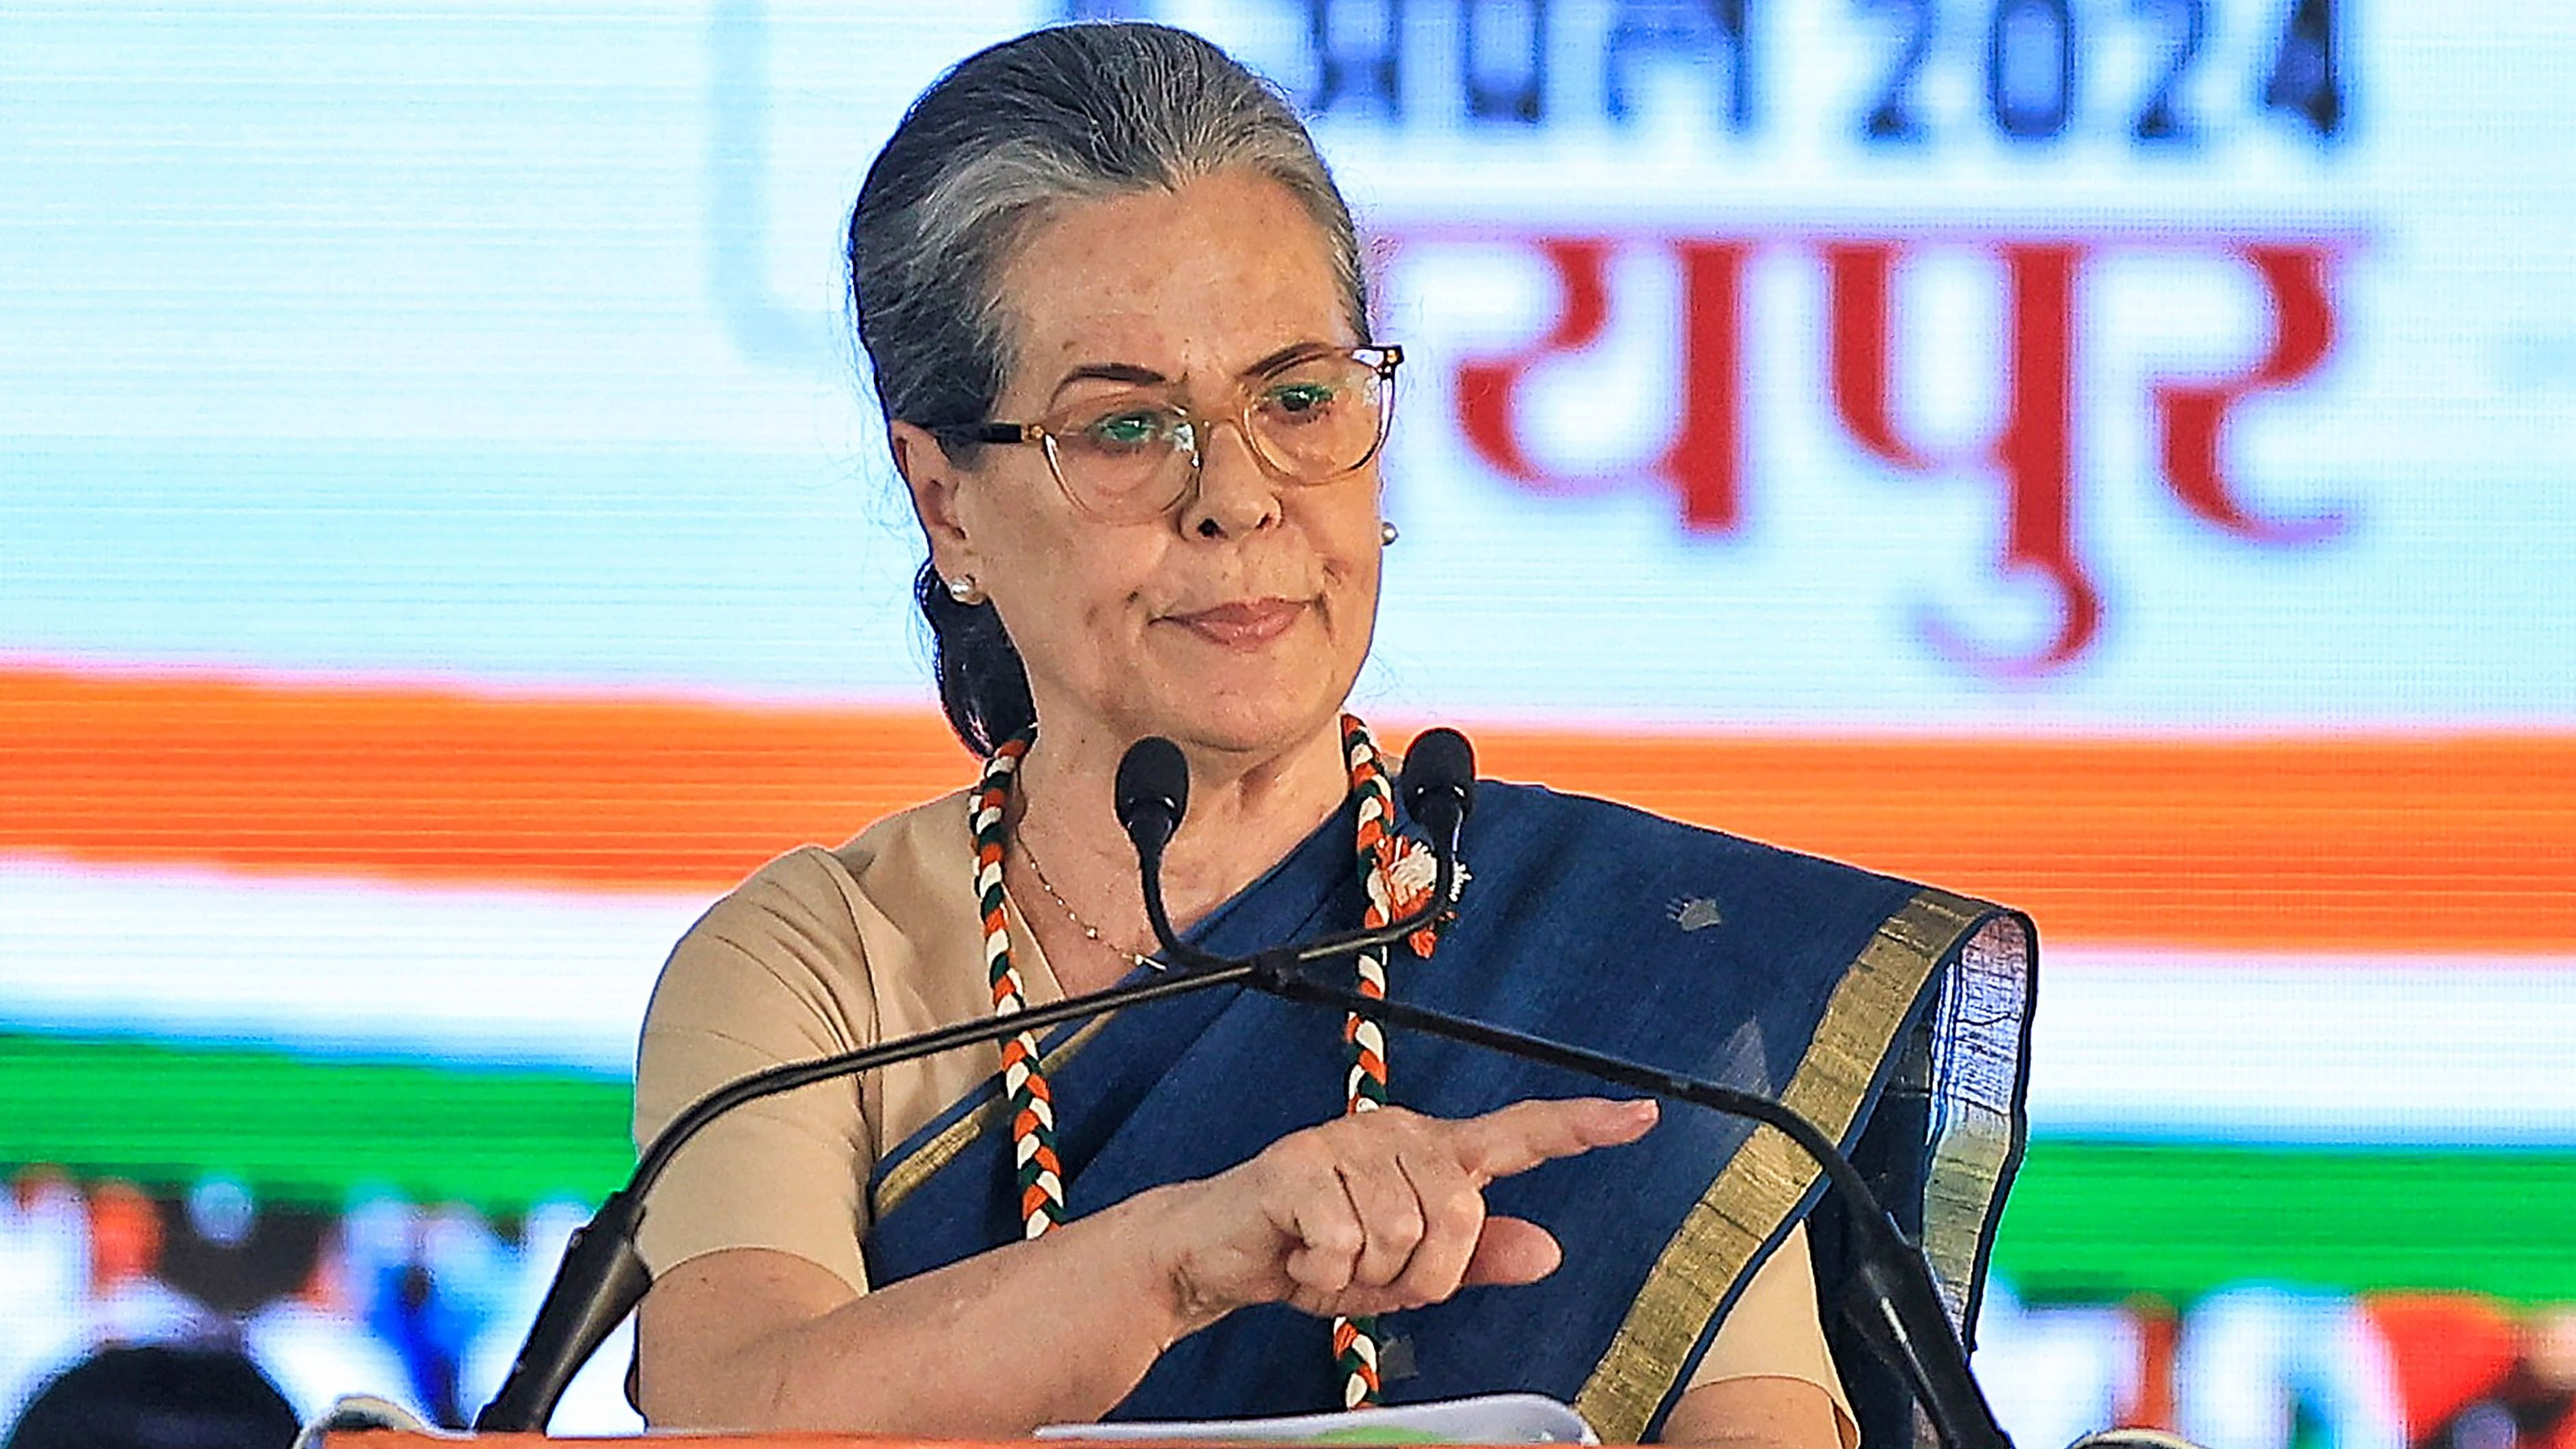 <div class="paragraphs"><p>Congress leader Sonia Gandhi speaks during a public meeting, ahead of Lok Sabha elections, in Jaipur.</p></div>